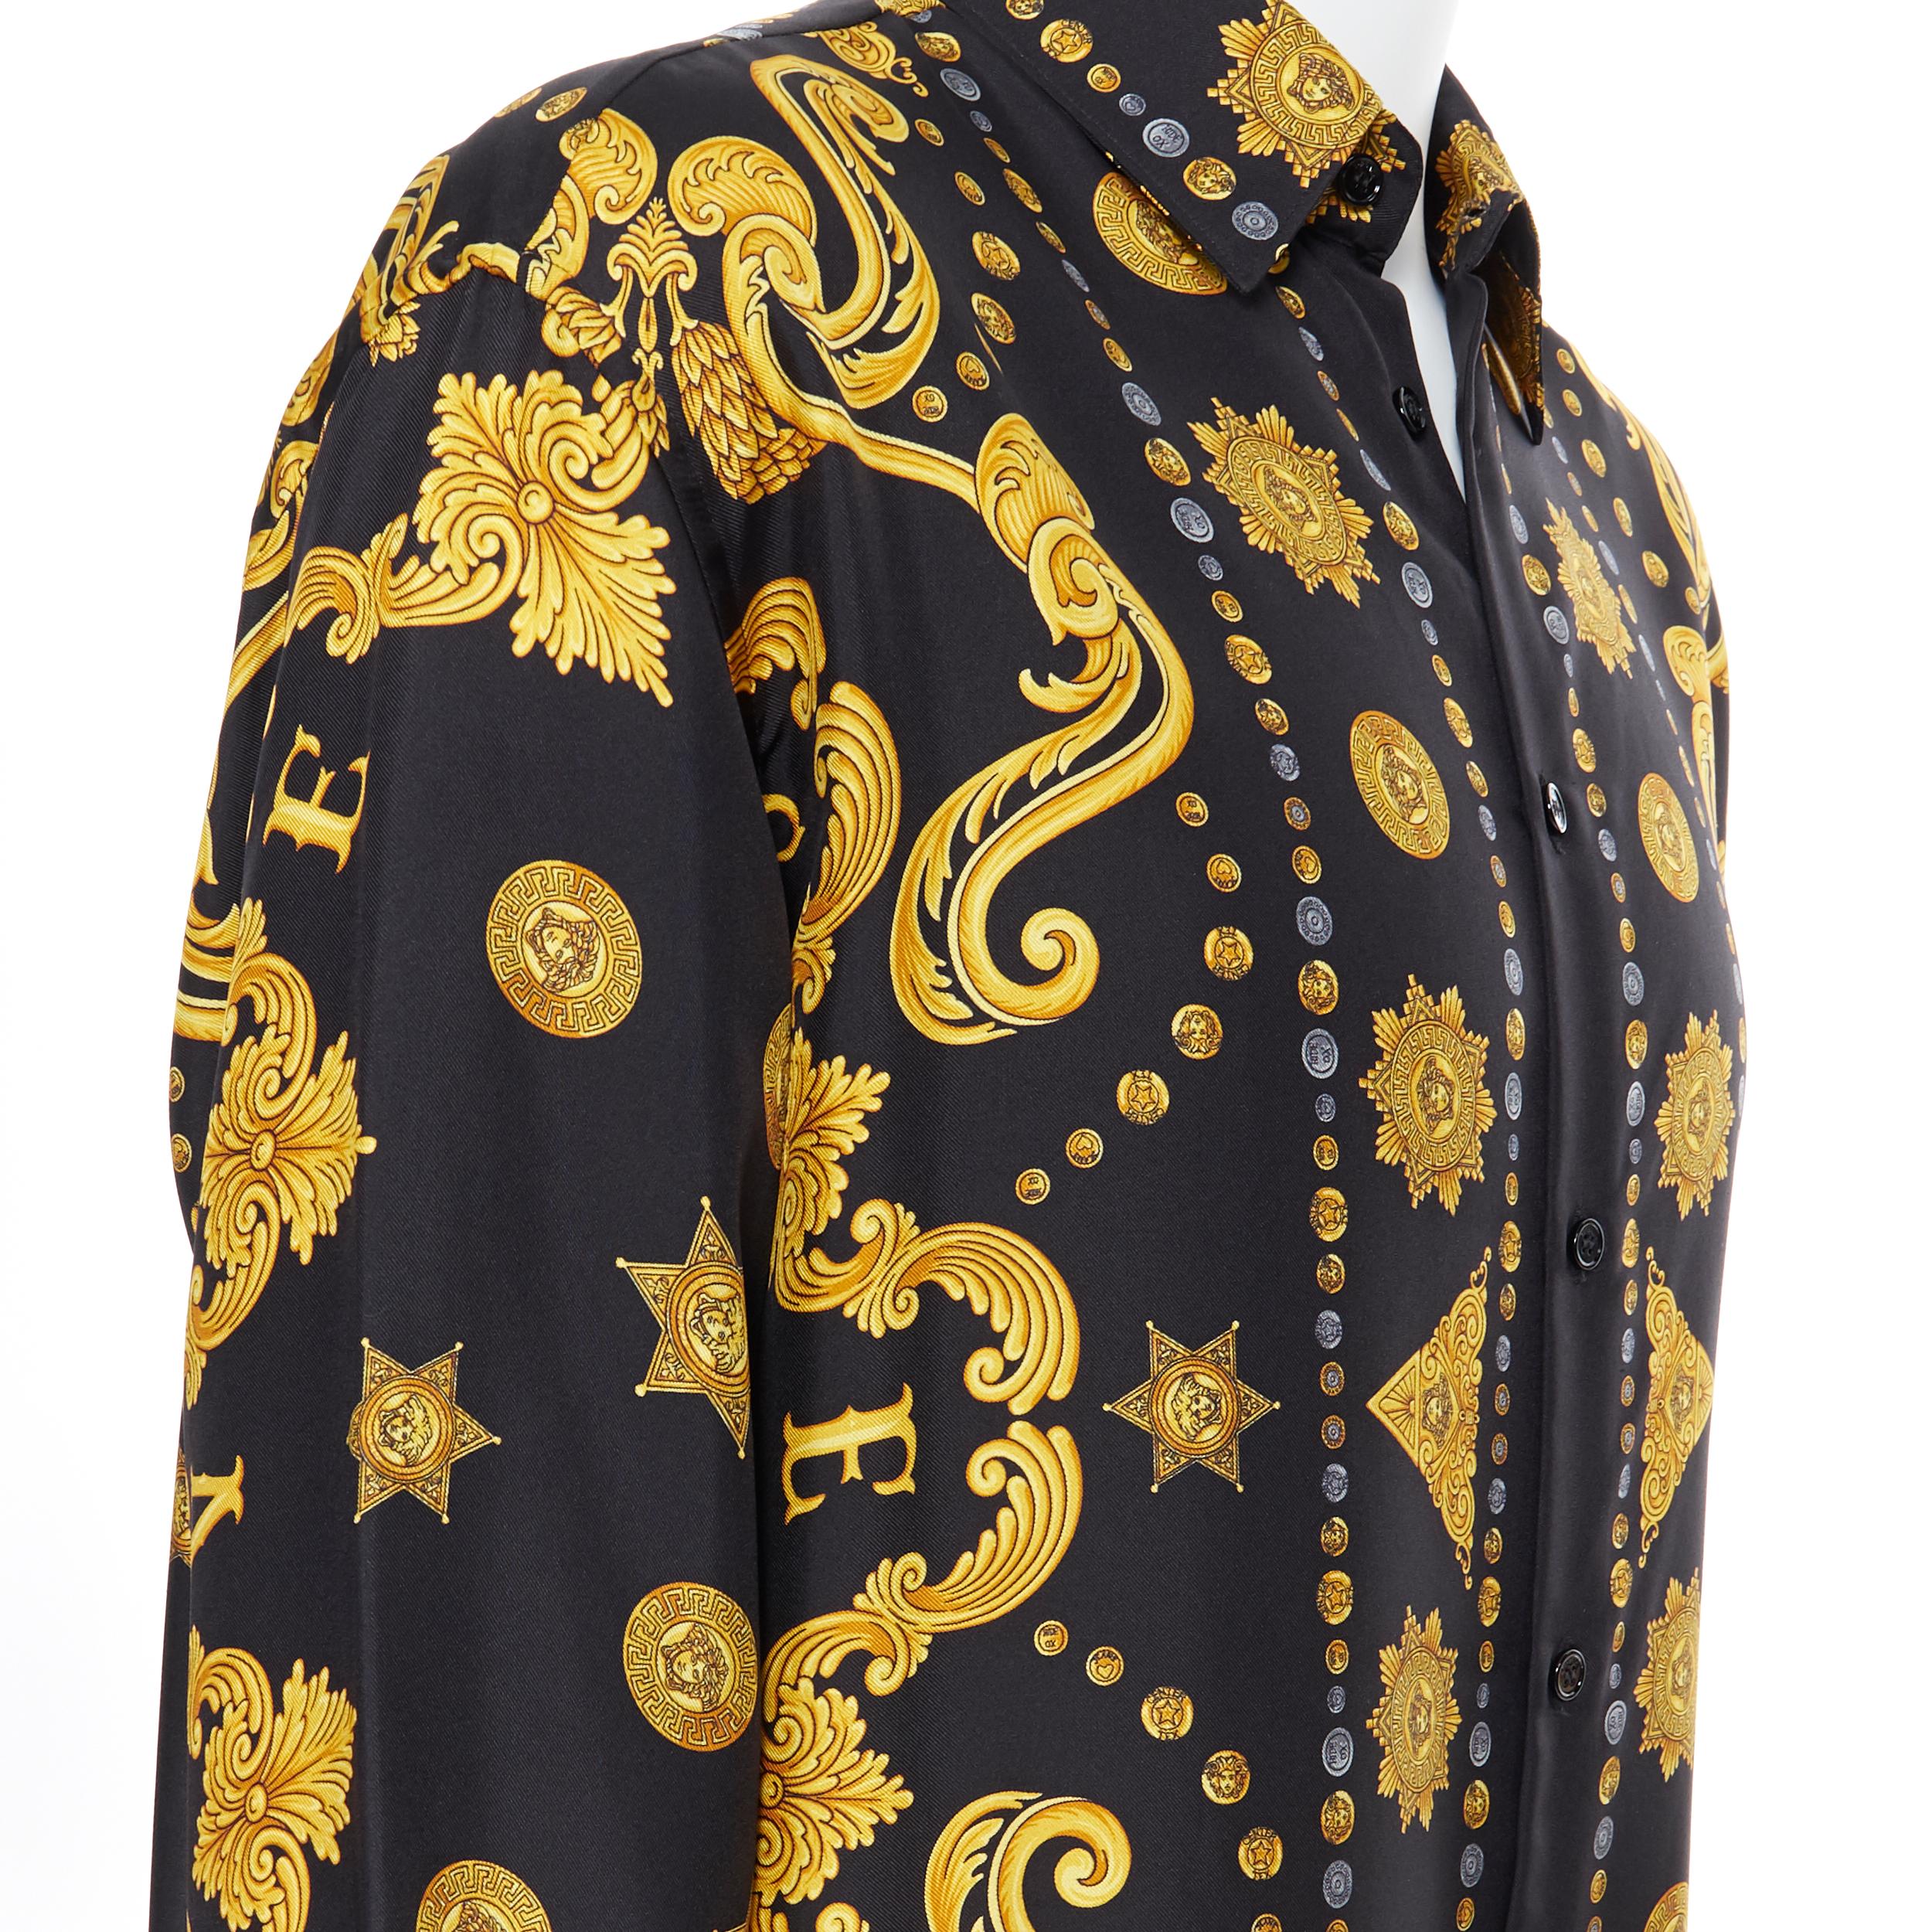 new VERSACE black gold Medusa coin western star baroque print silk shirt EU41 L 1